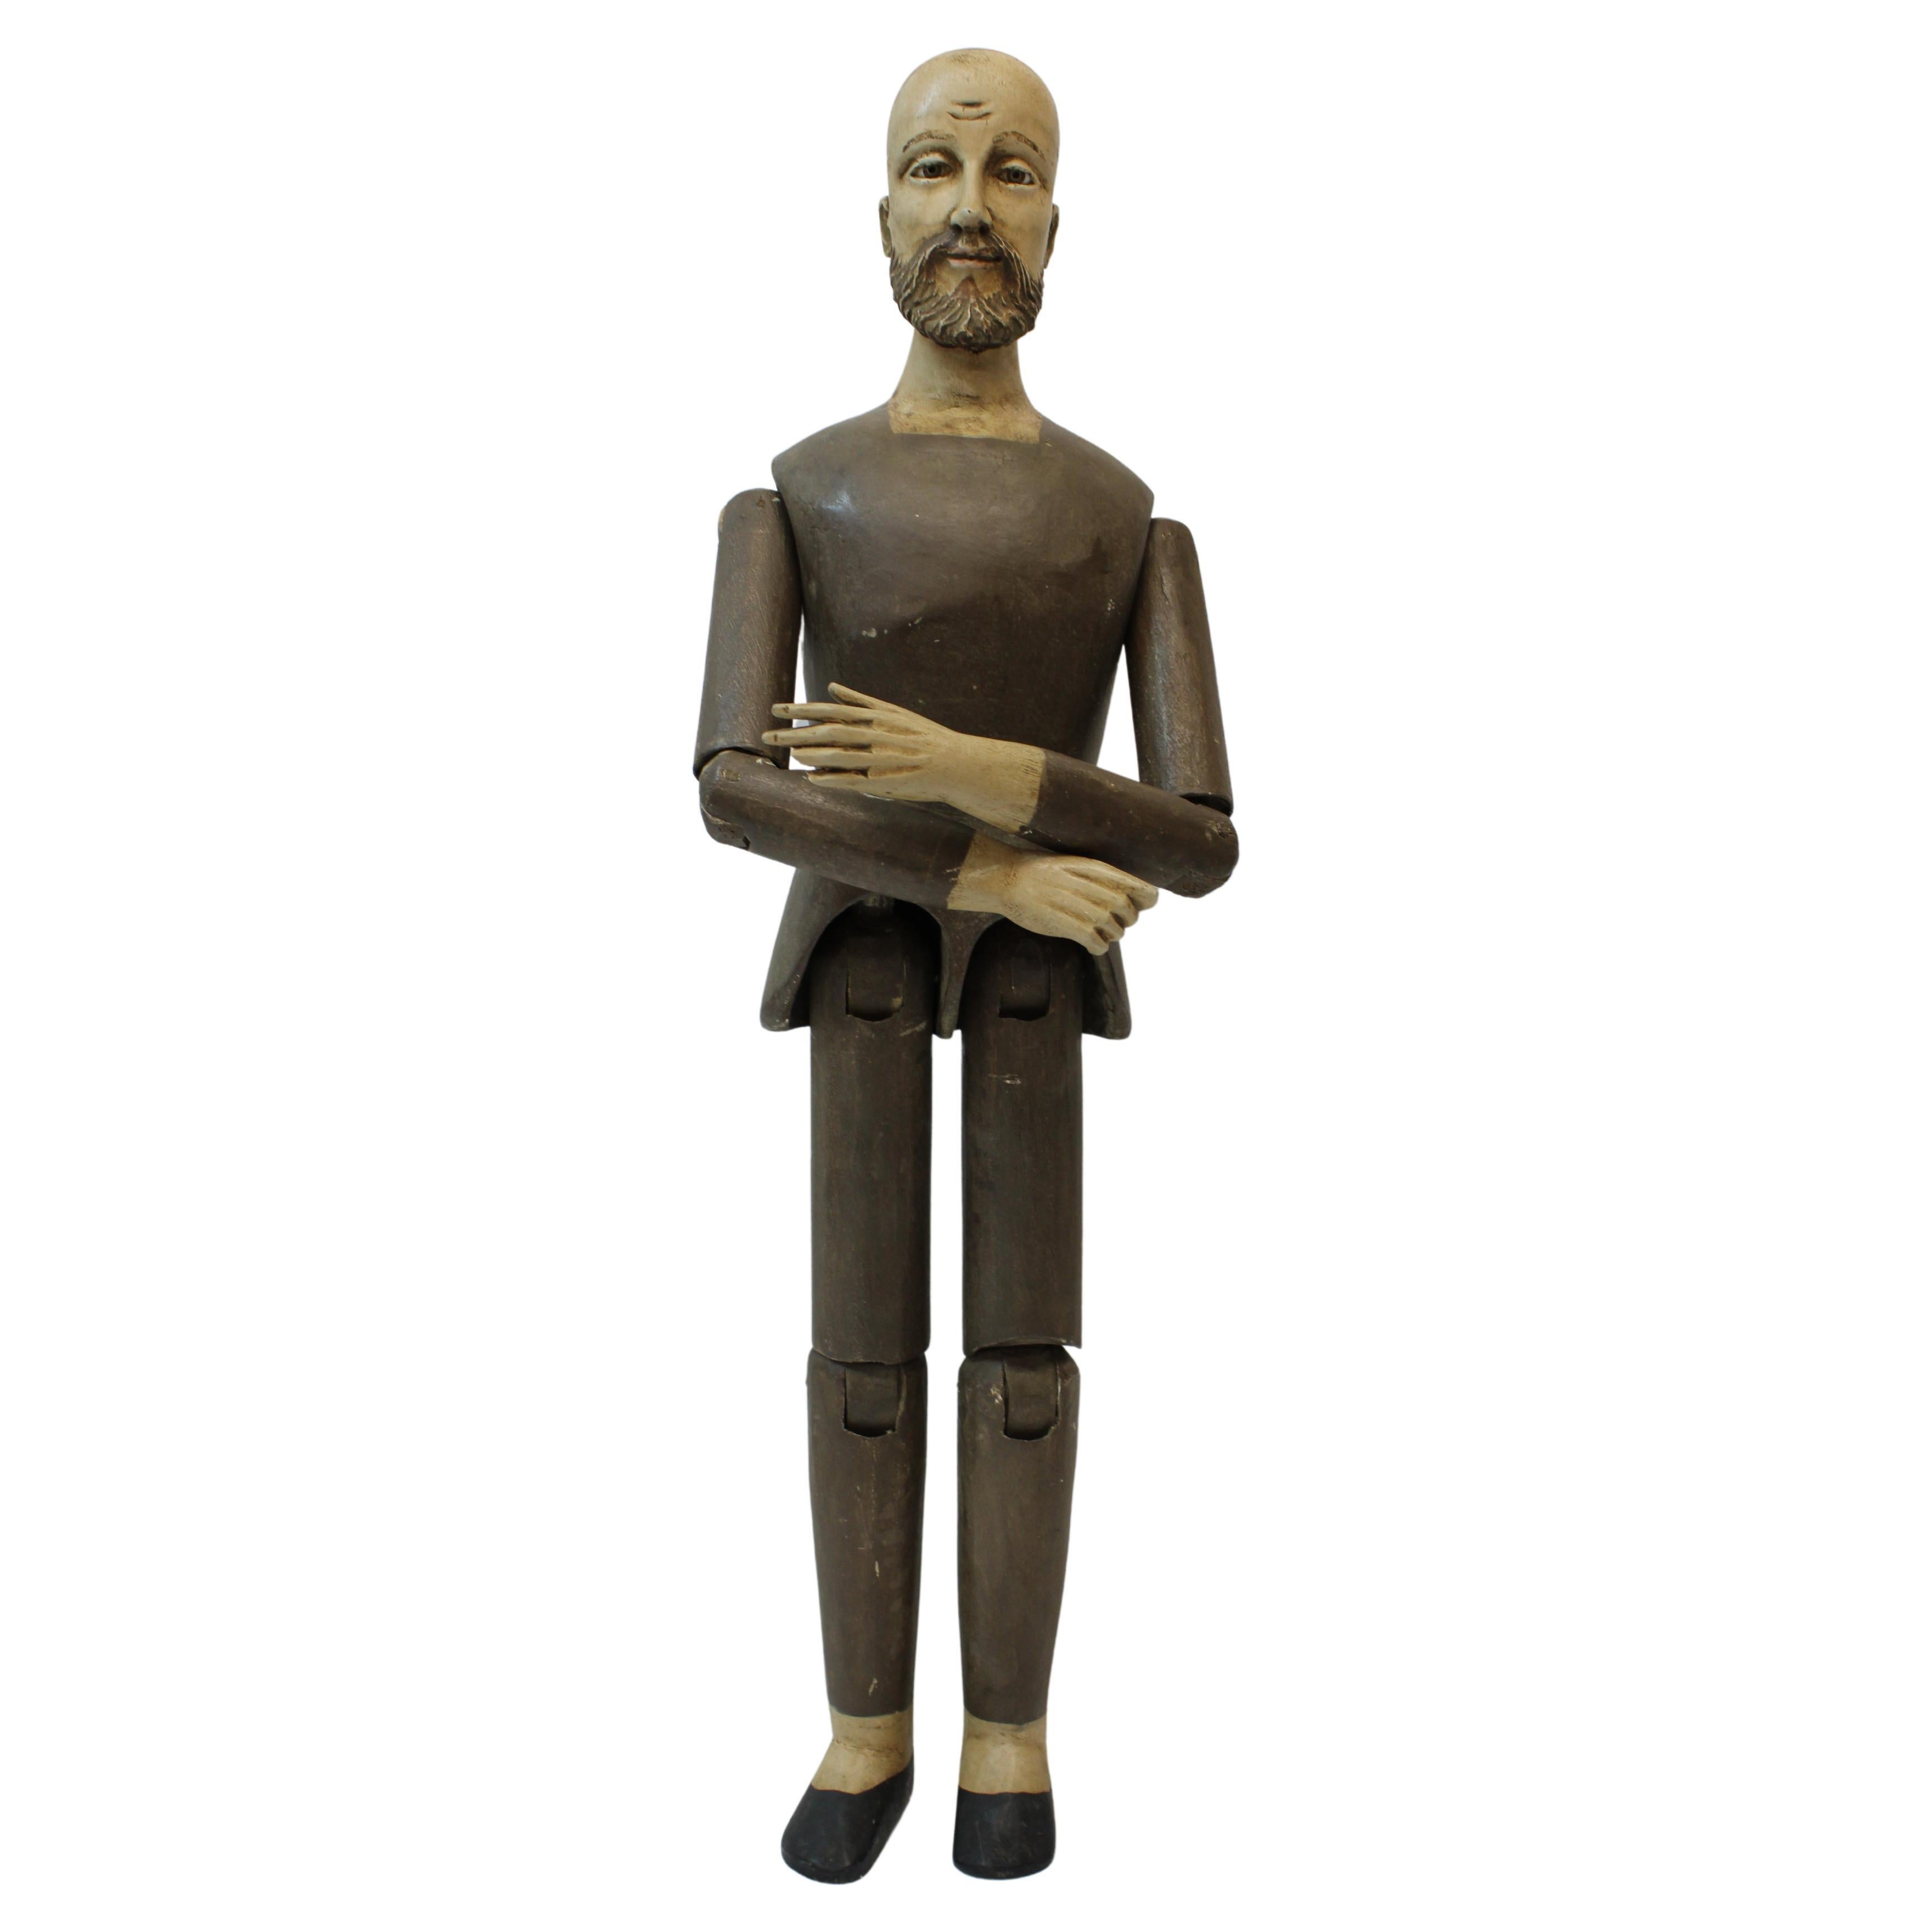 European Articulated Wood Figure "Giuseppe" For Sale